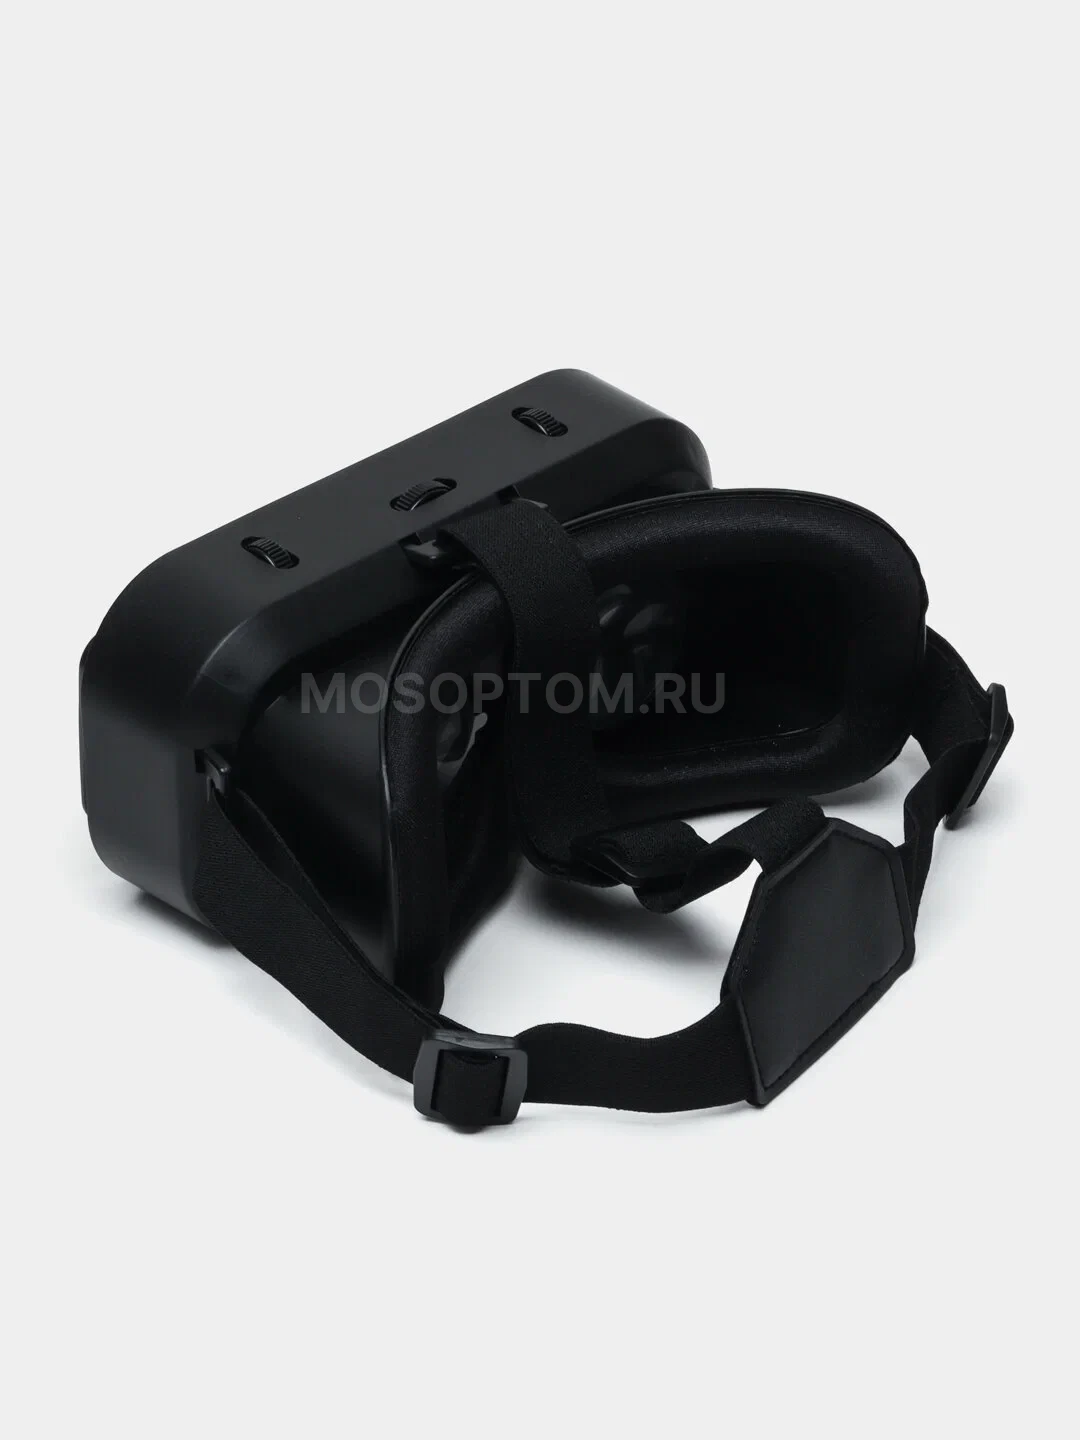 Очки виртуальной реальности VR Shinecon SC-G13 без контроллера оптом - Фото №4